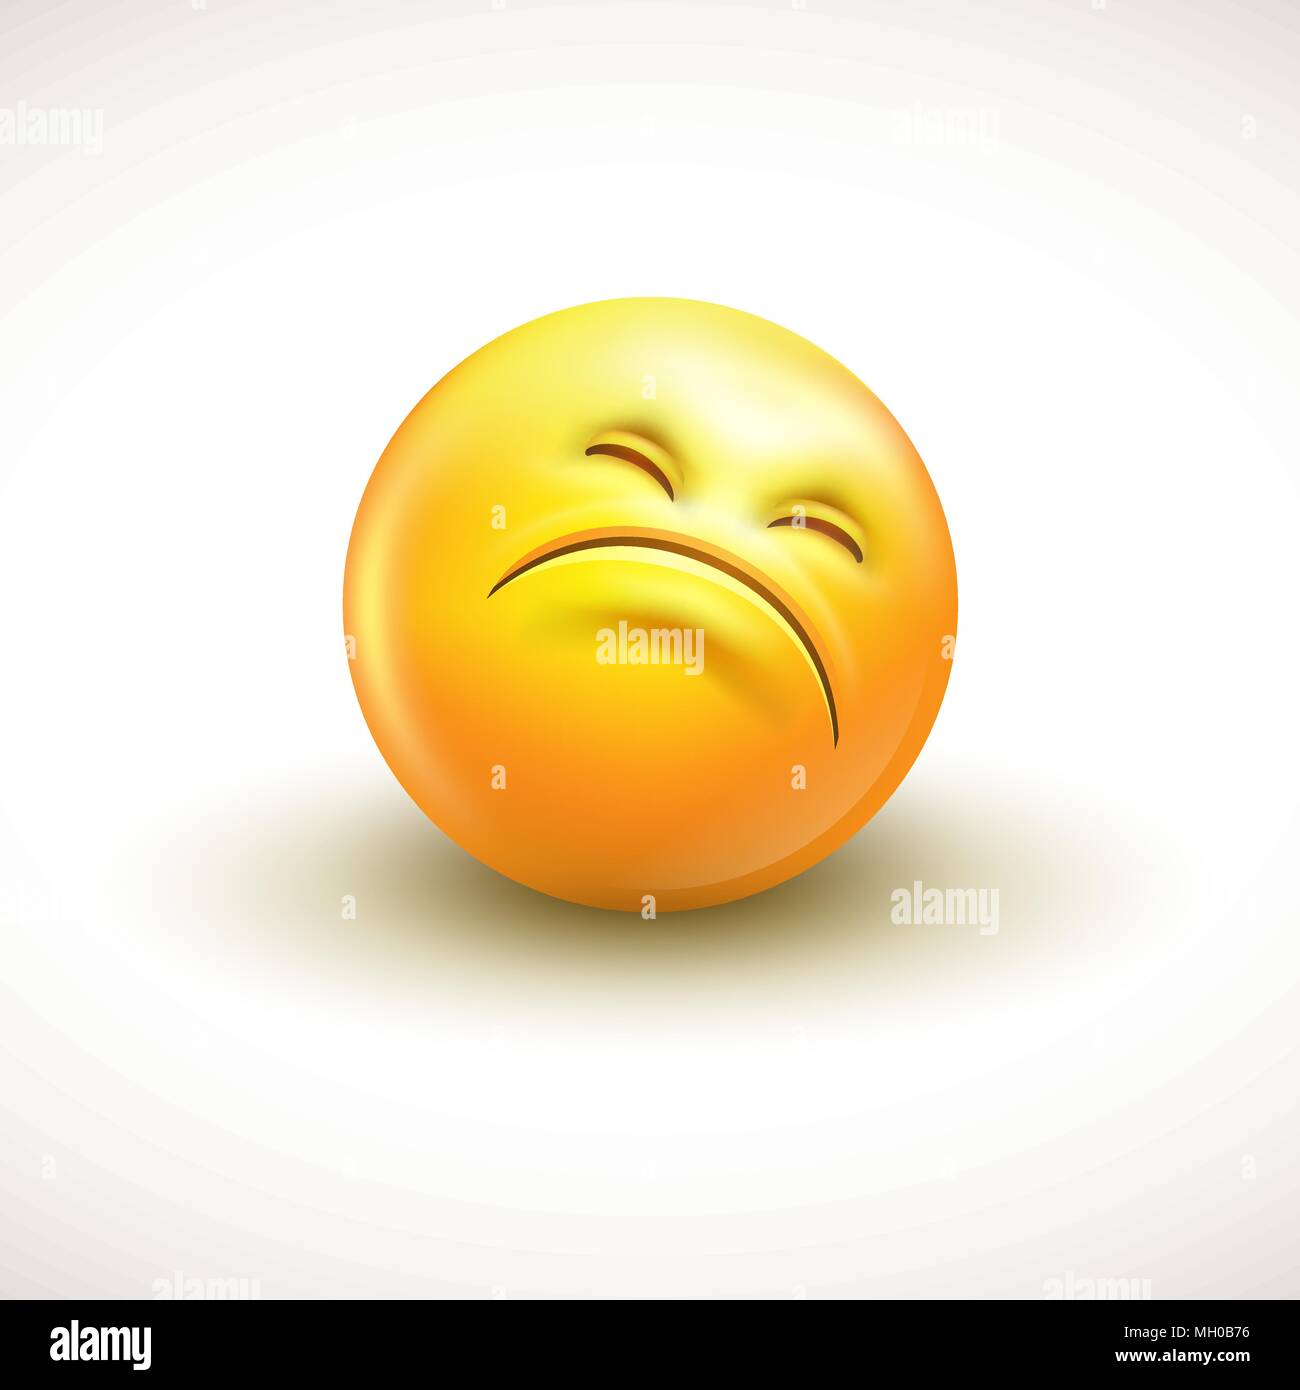 Emoji Pillow Sham Cartoon Like Smiley Faces of Mosters Happy Sad